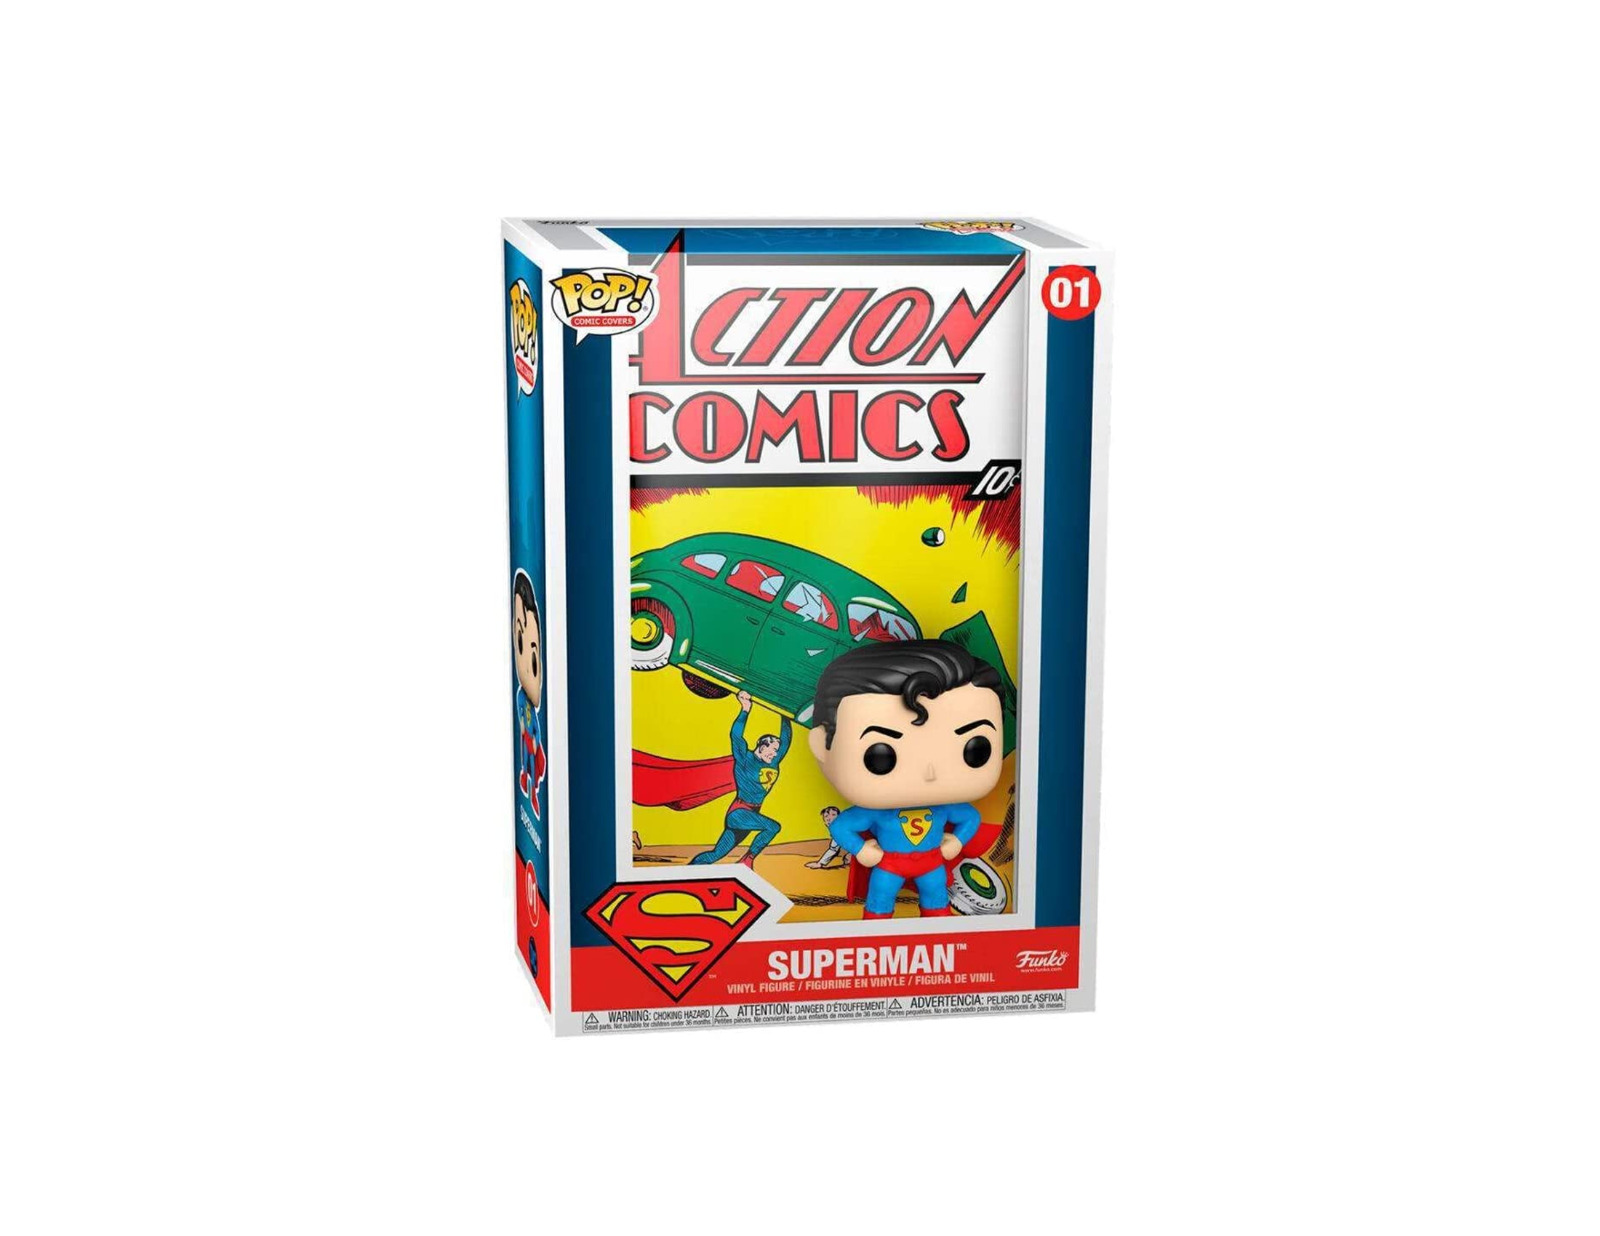 Funko Pop Comic Cover - DC - Superman Action Comic #01